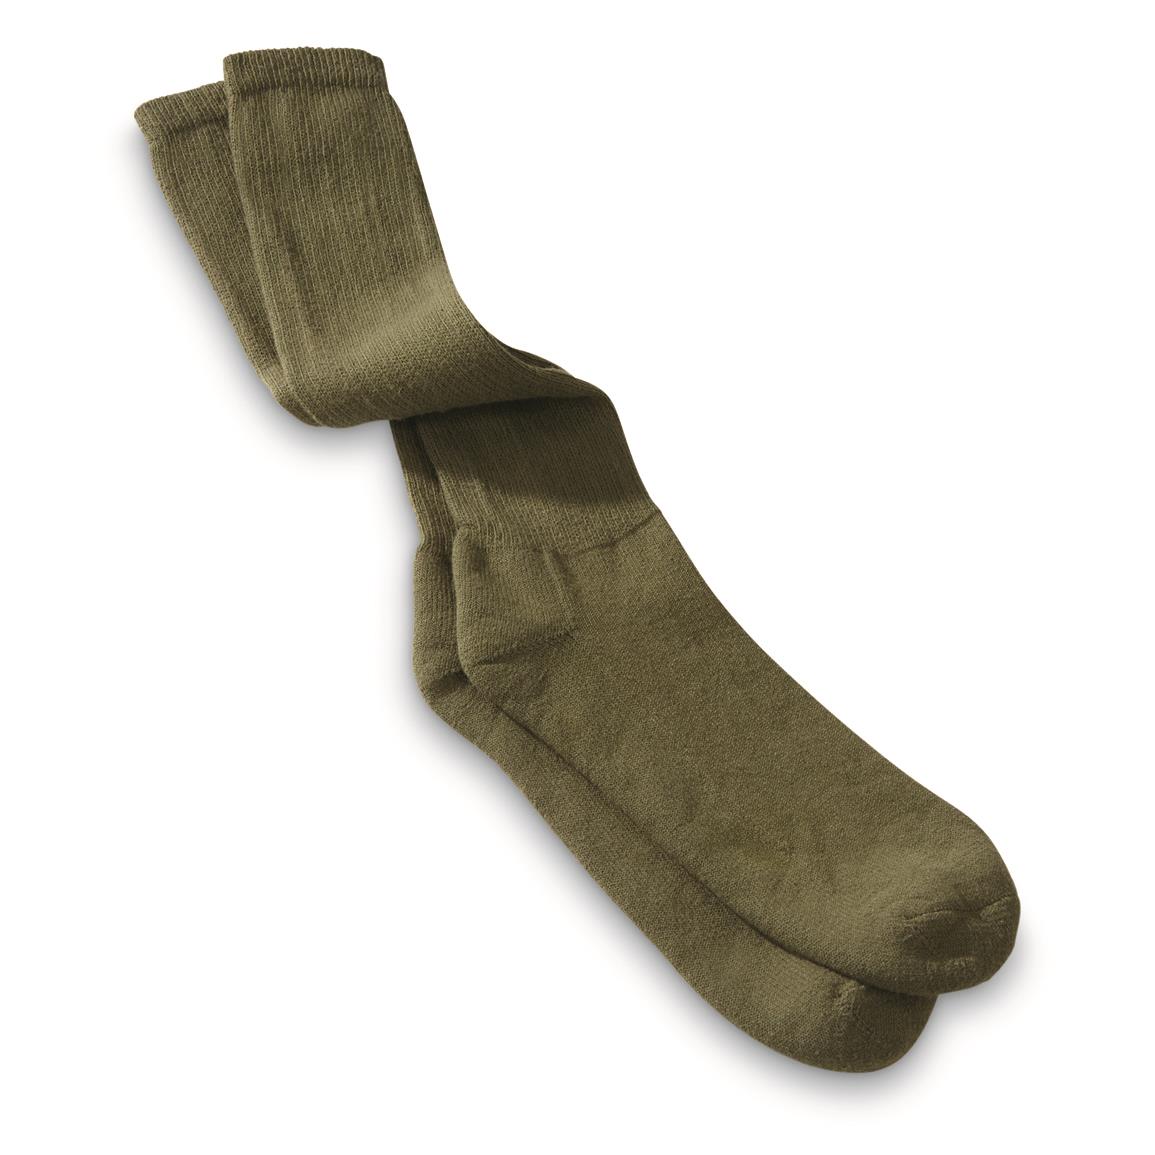 U.S. Military Surplus DLA Boot Socks, 3 Pack, New, Olive Drab